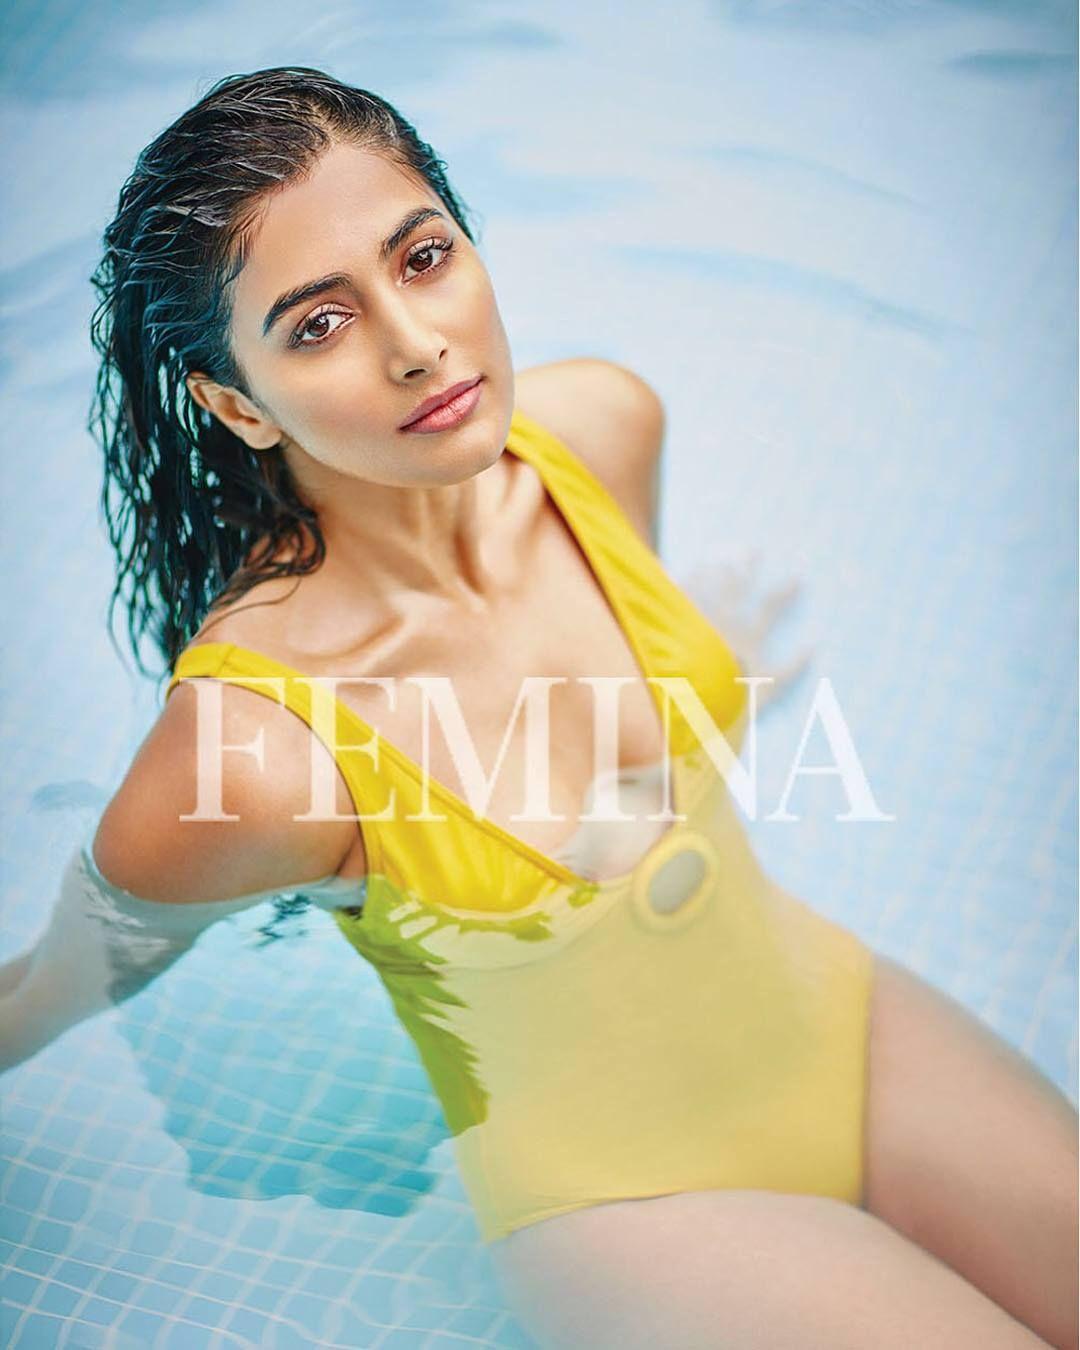 Pooja Hegde Femina Hot Photo Shoot ULTRA HD Photos